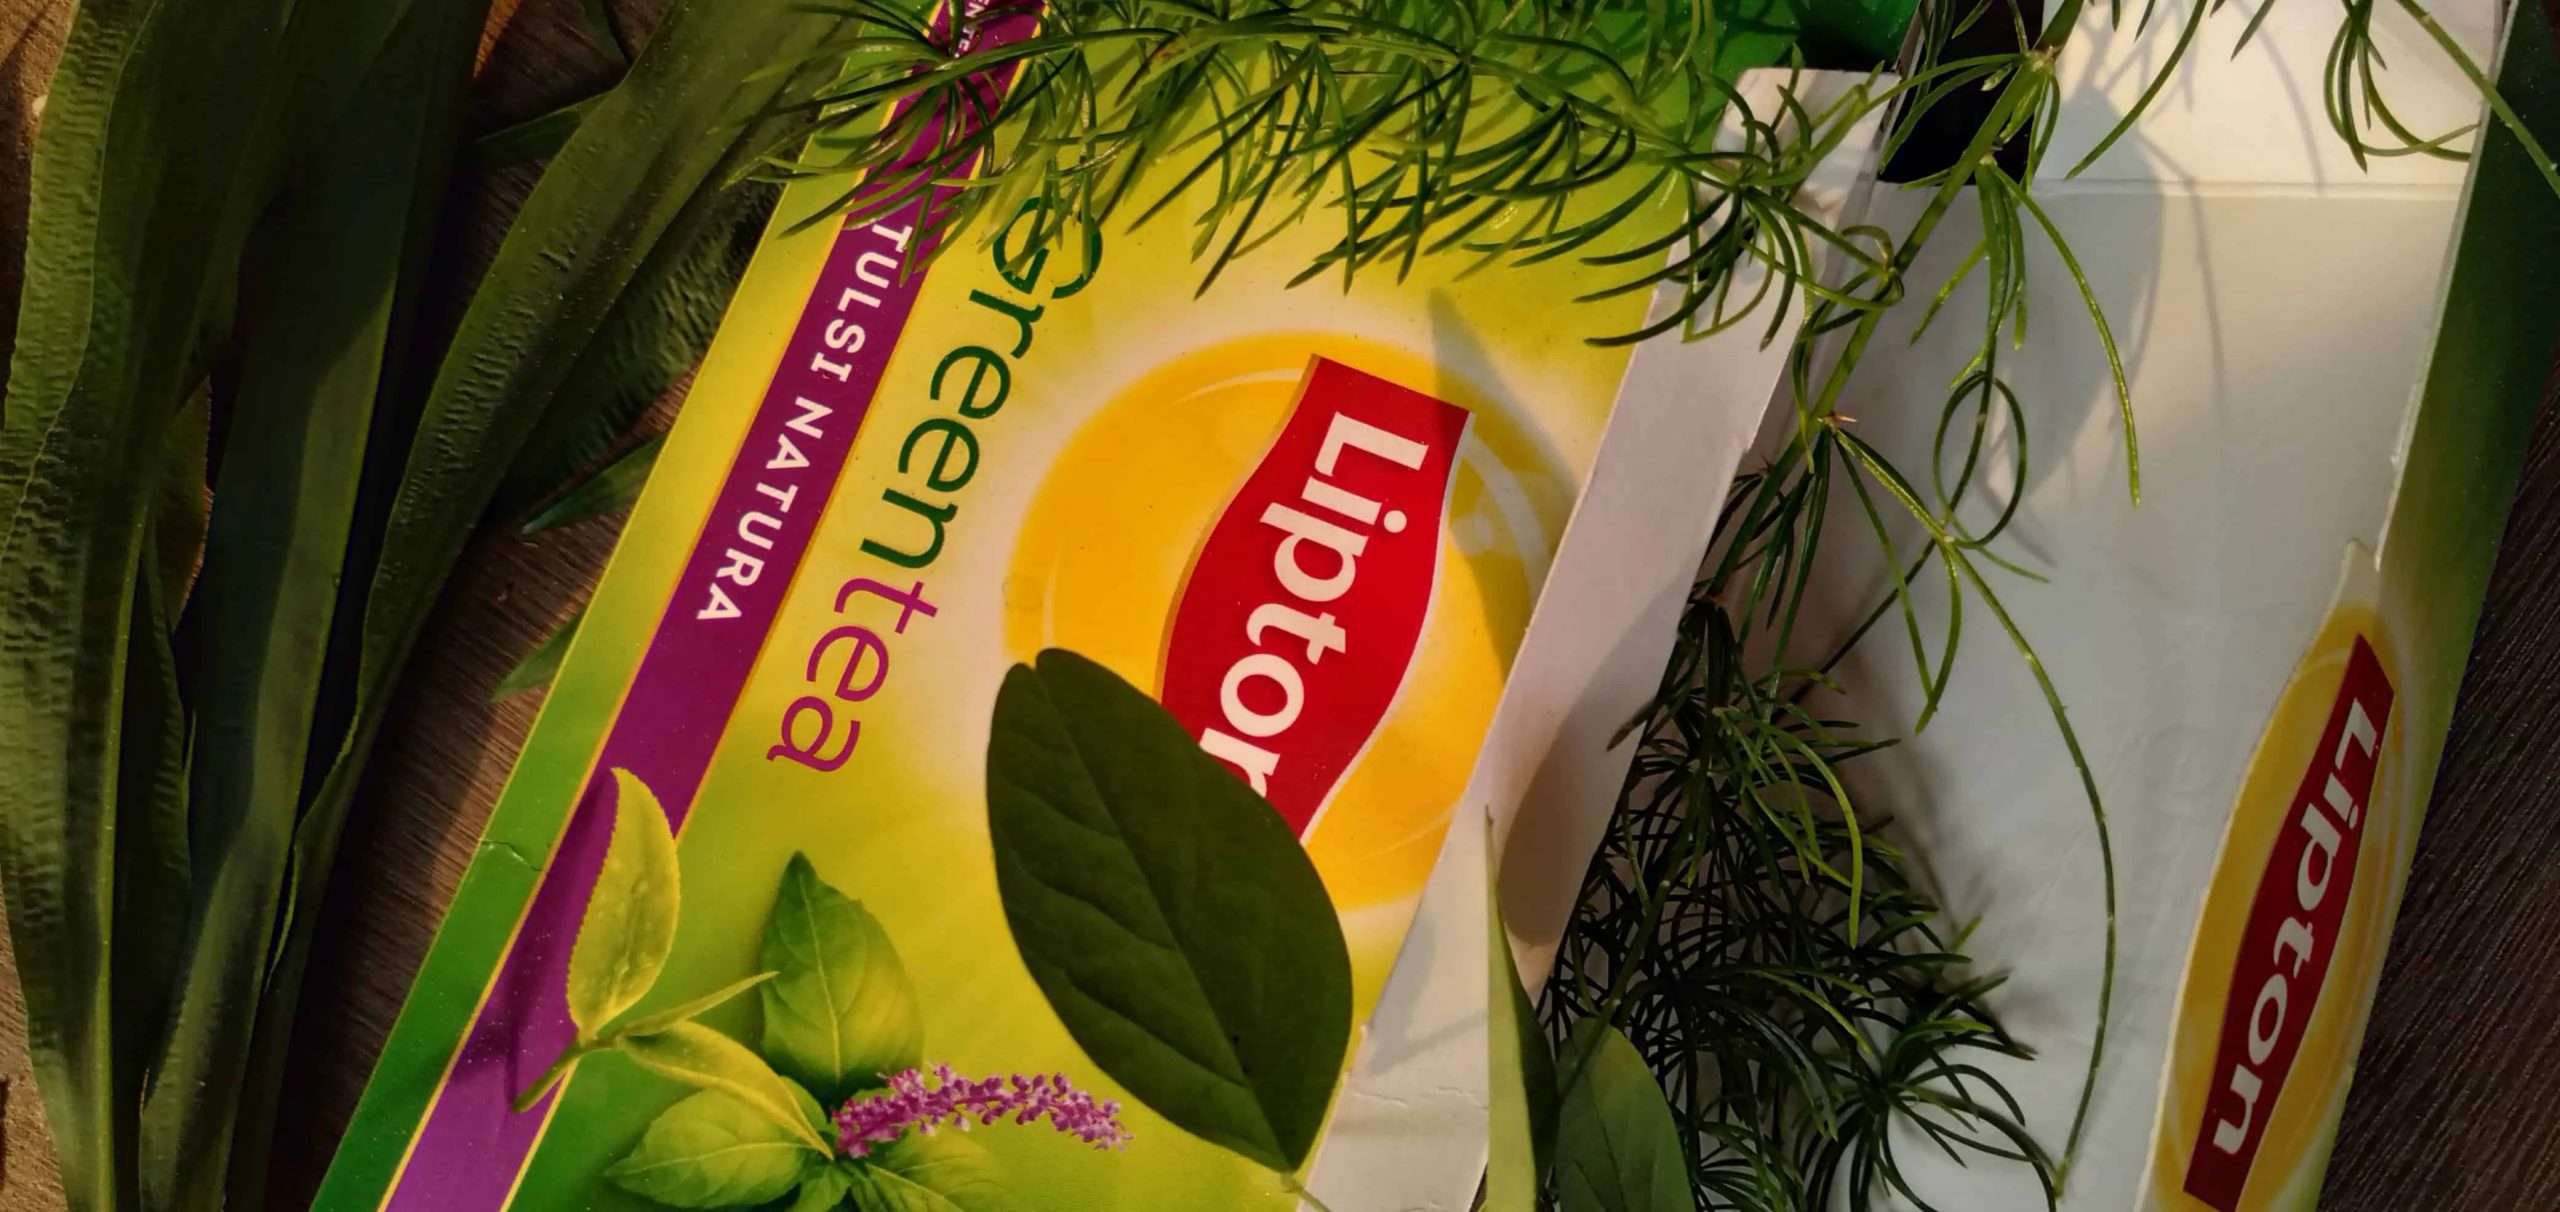 Lipton green tea review